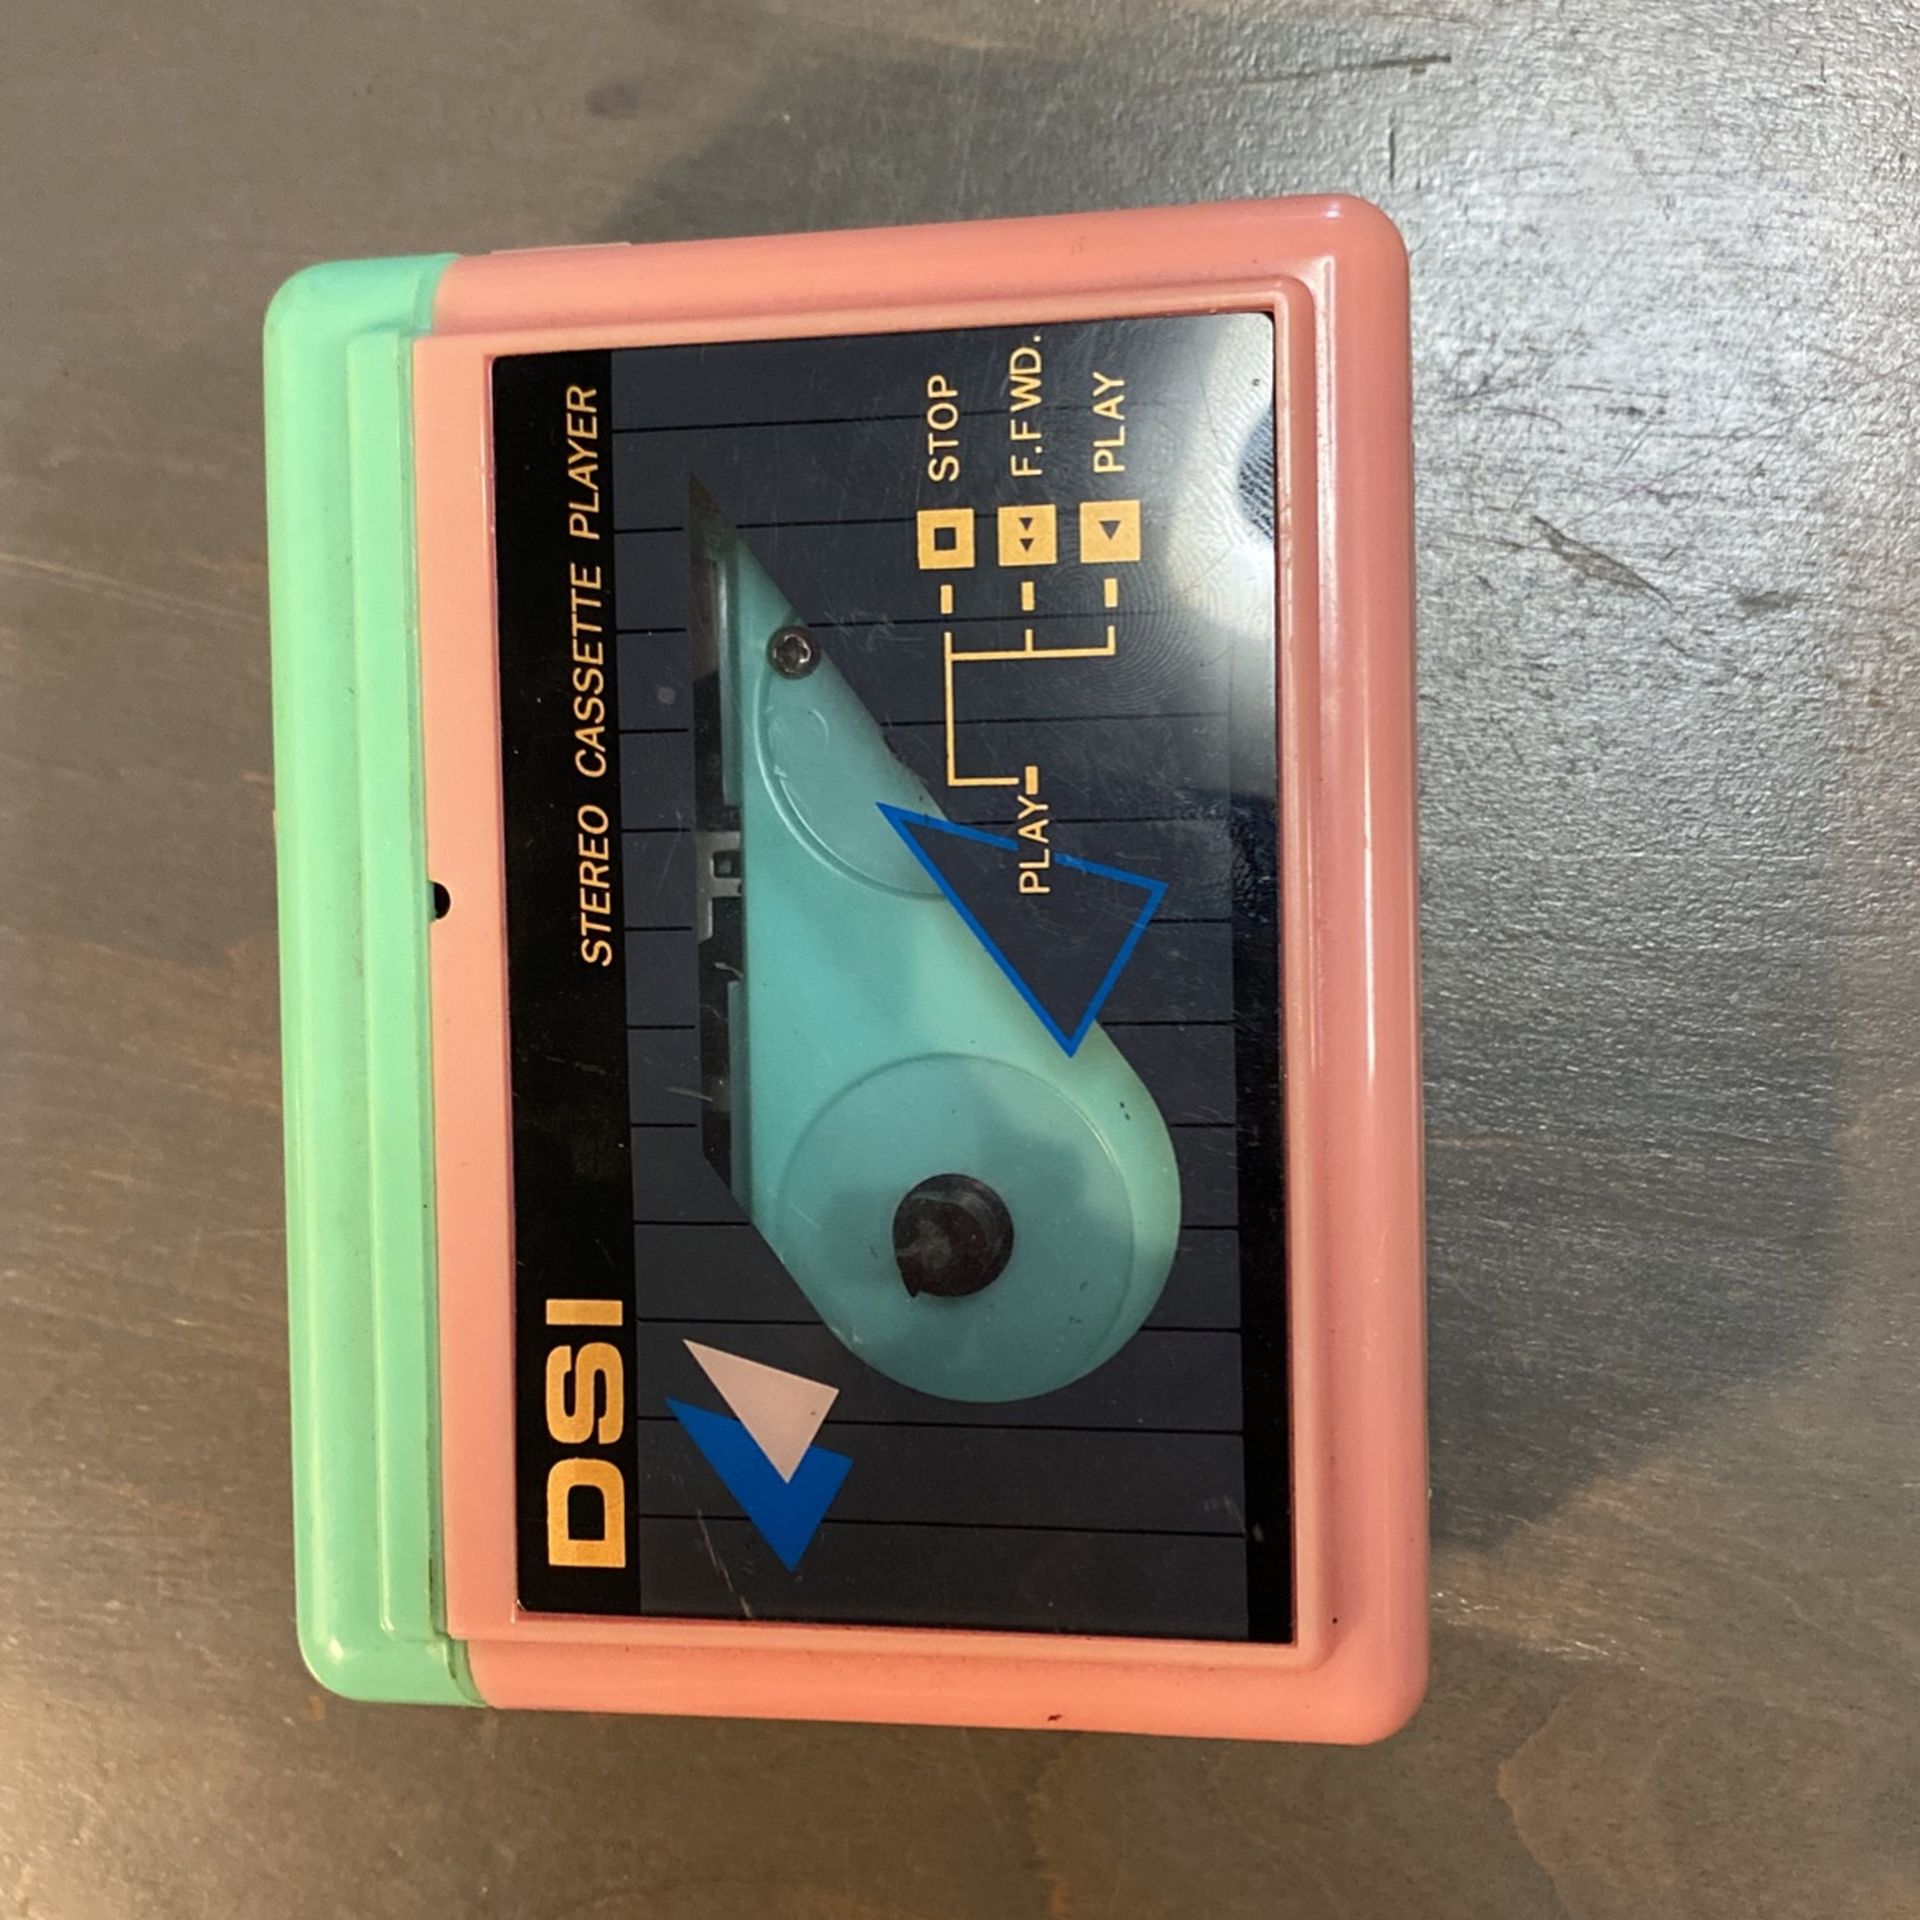 Vintage 80s/90s DSI Stereo Cassette Player Handheld Cassette - Pinterest Apr 6, 2017 - Super cute pink and mint green cassette player. 